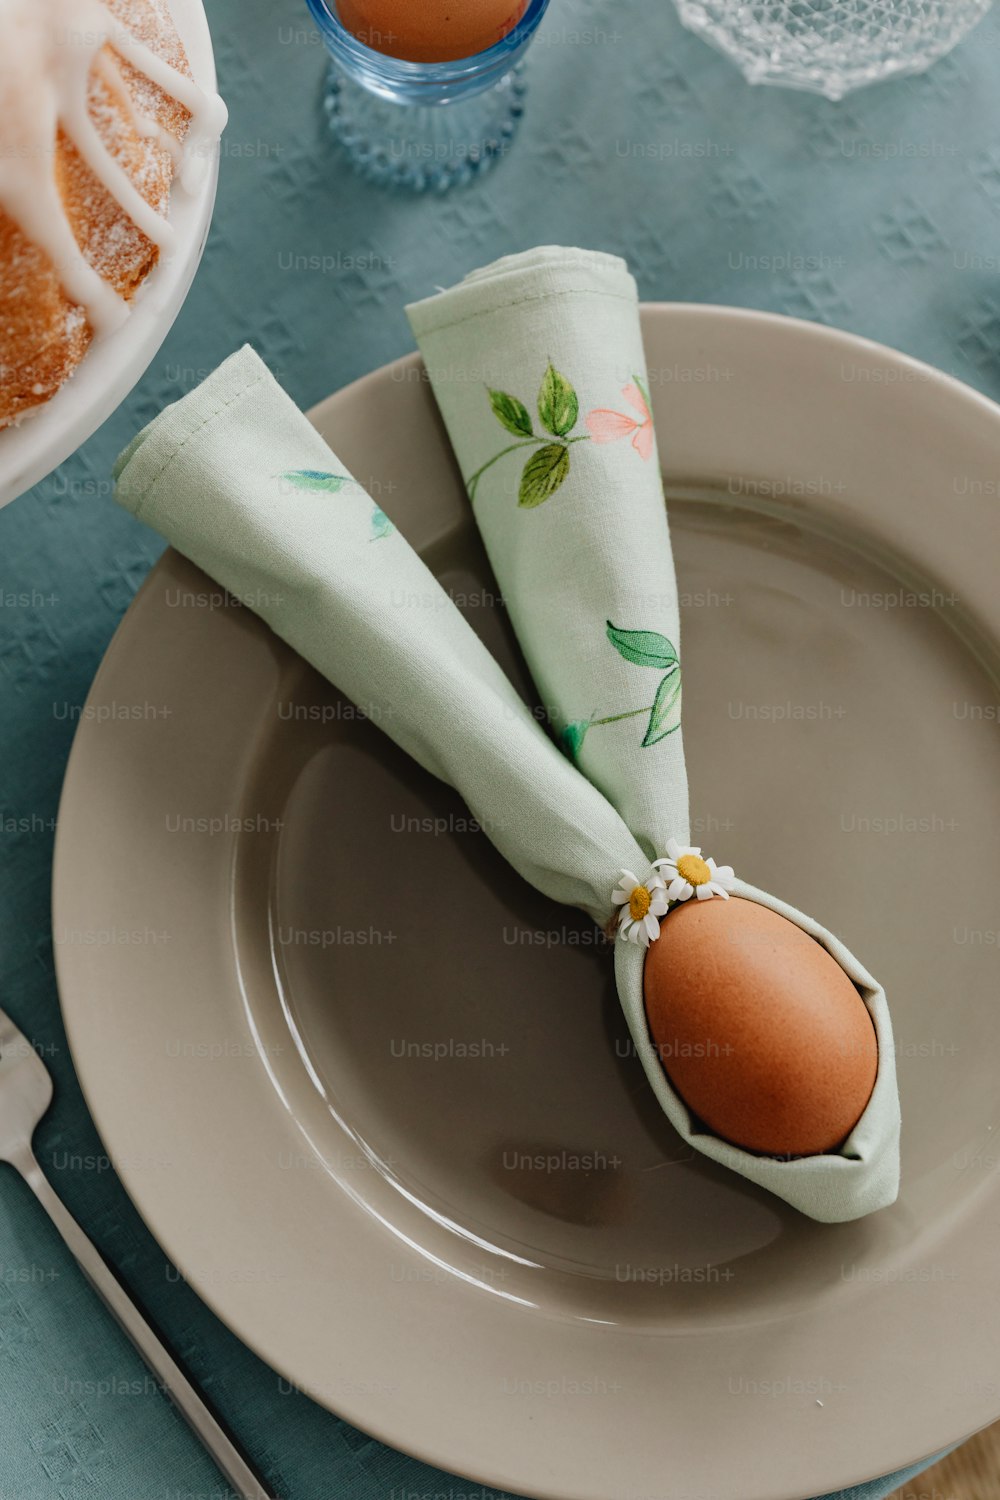 an egg on a napkin on a plate